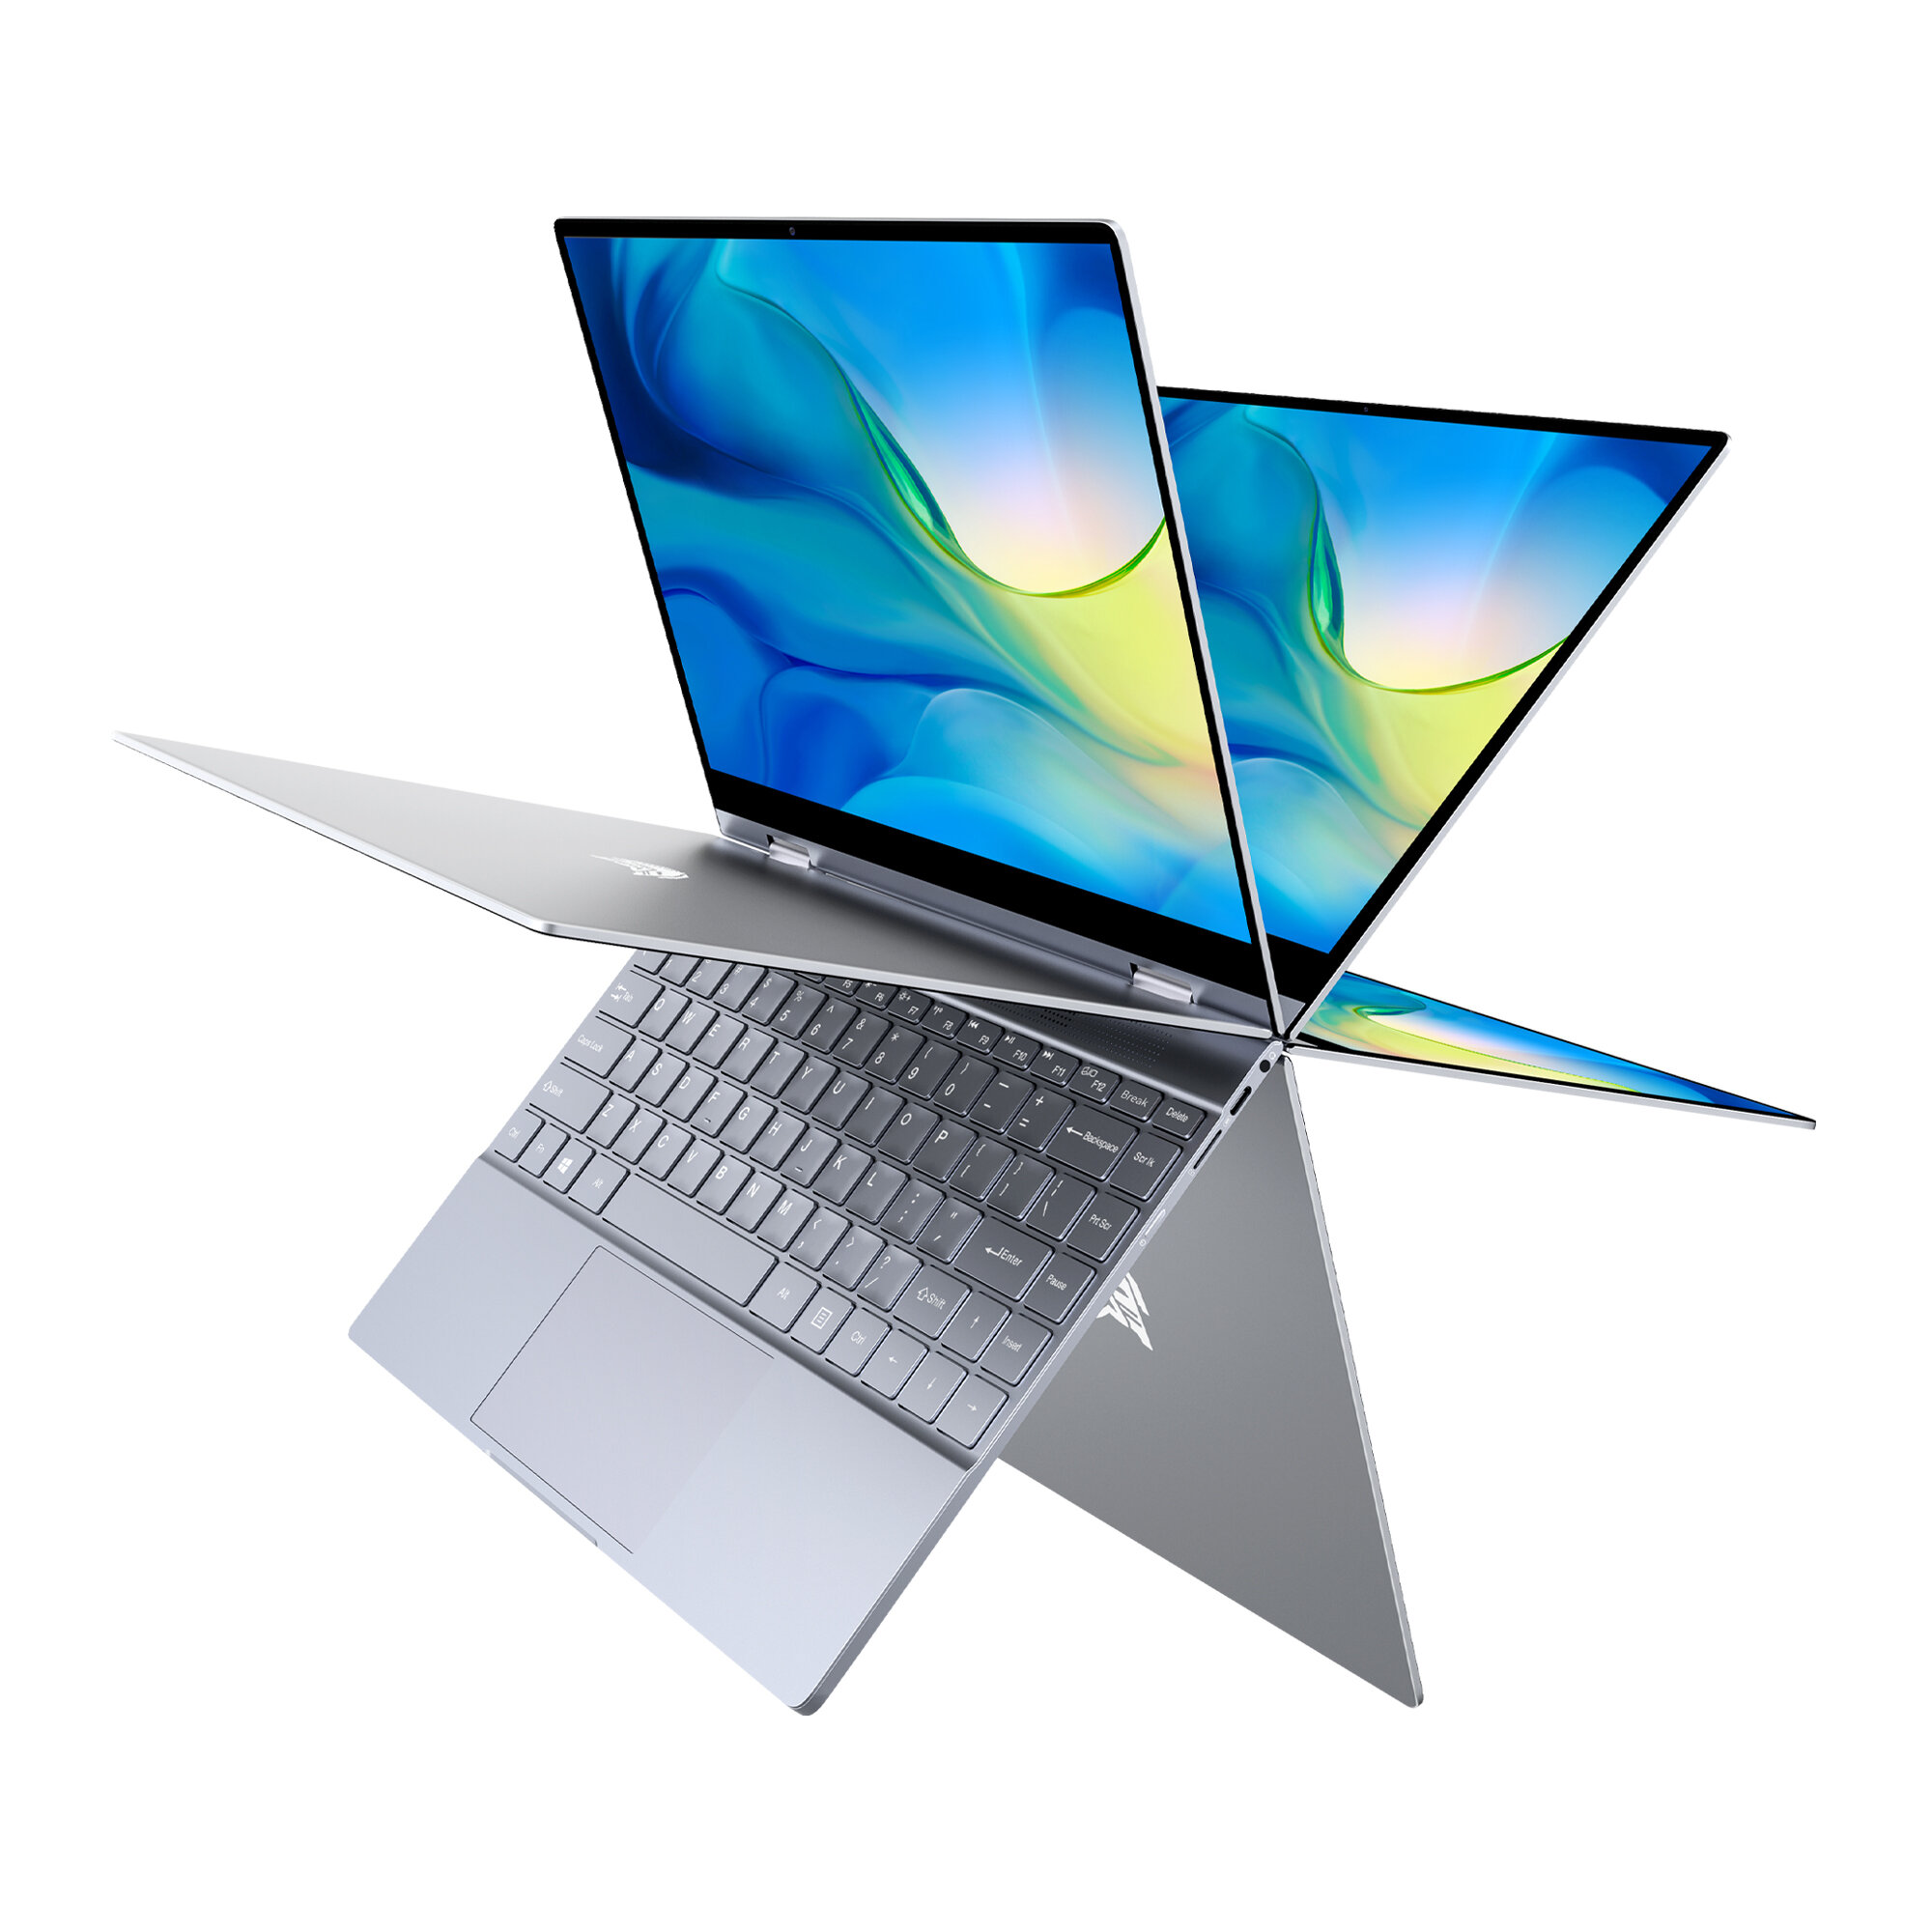 BMAX Y13 Laptop 13.3 inch 360-degree Touchscreen Intel N4120 8GB 256GB SSD 5mm Narrow Bezel Backlight Notebook